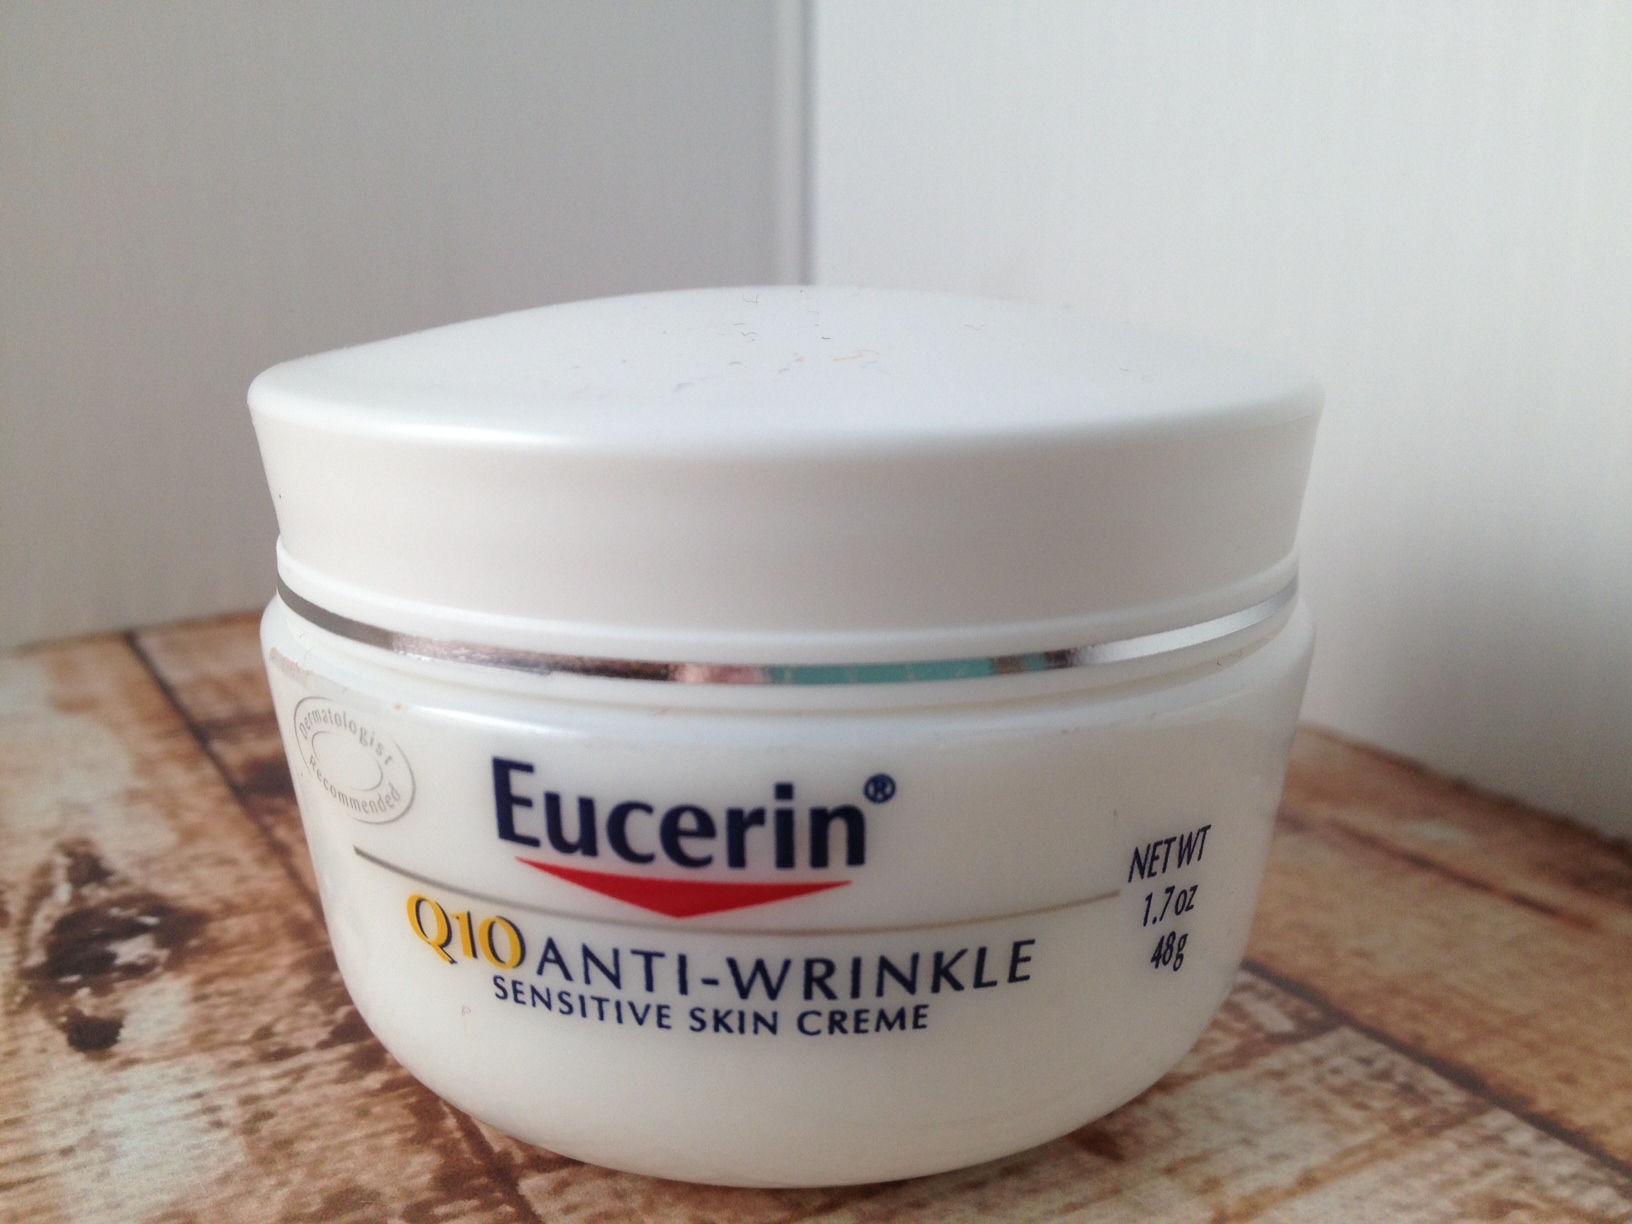 Q10 Anti-Wrinkle Sensitive Skin Creme/Cream Review Robin Cole